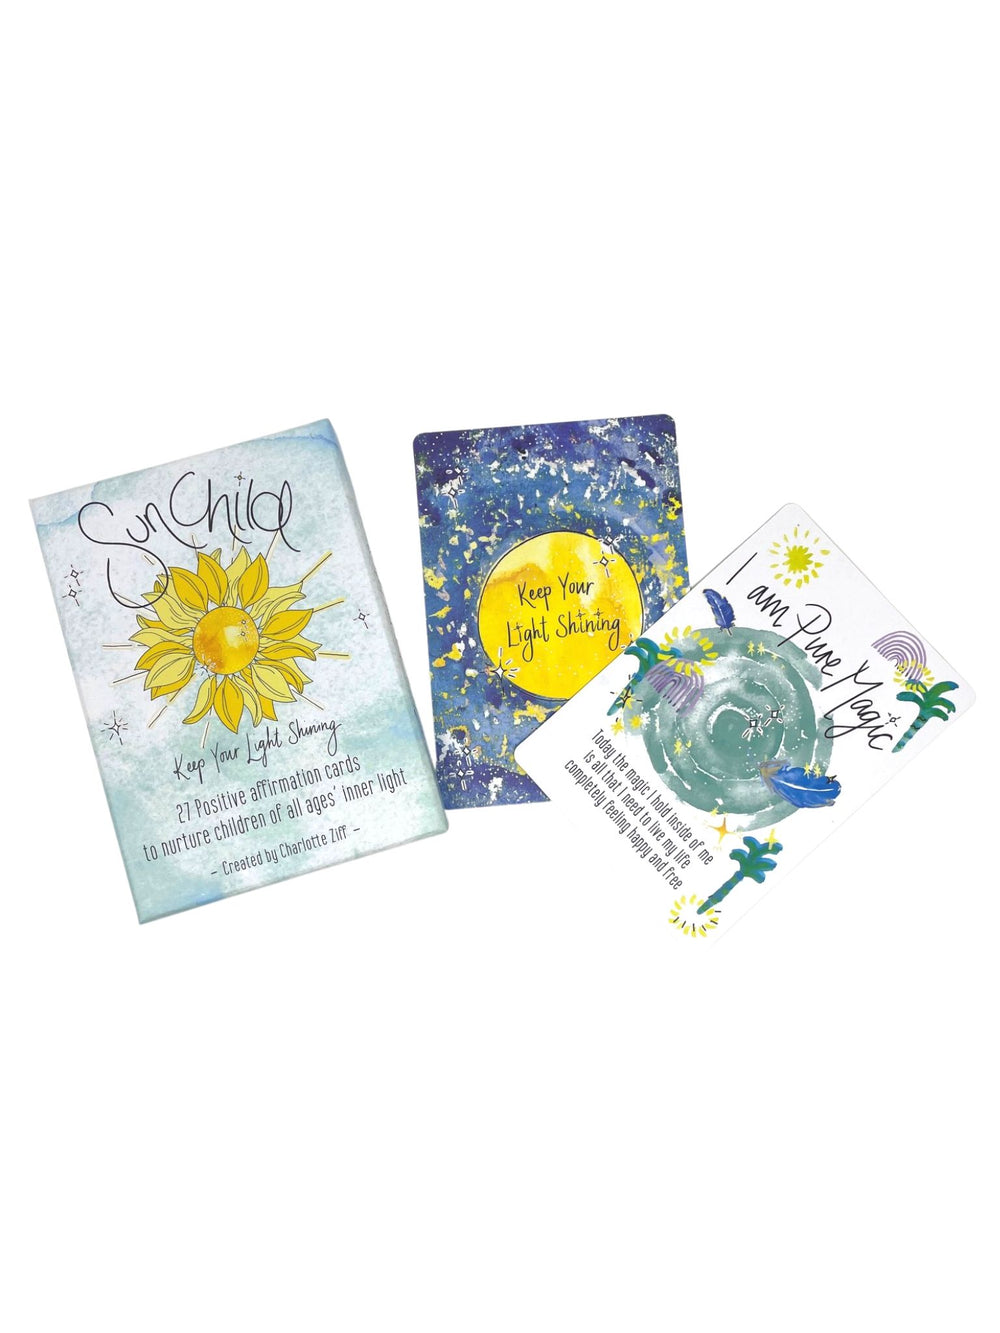 Sunchild's Affirmation cards